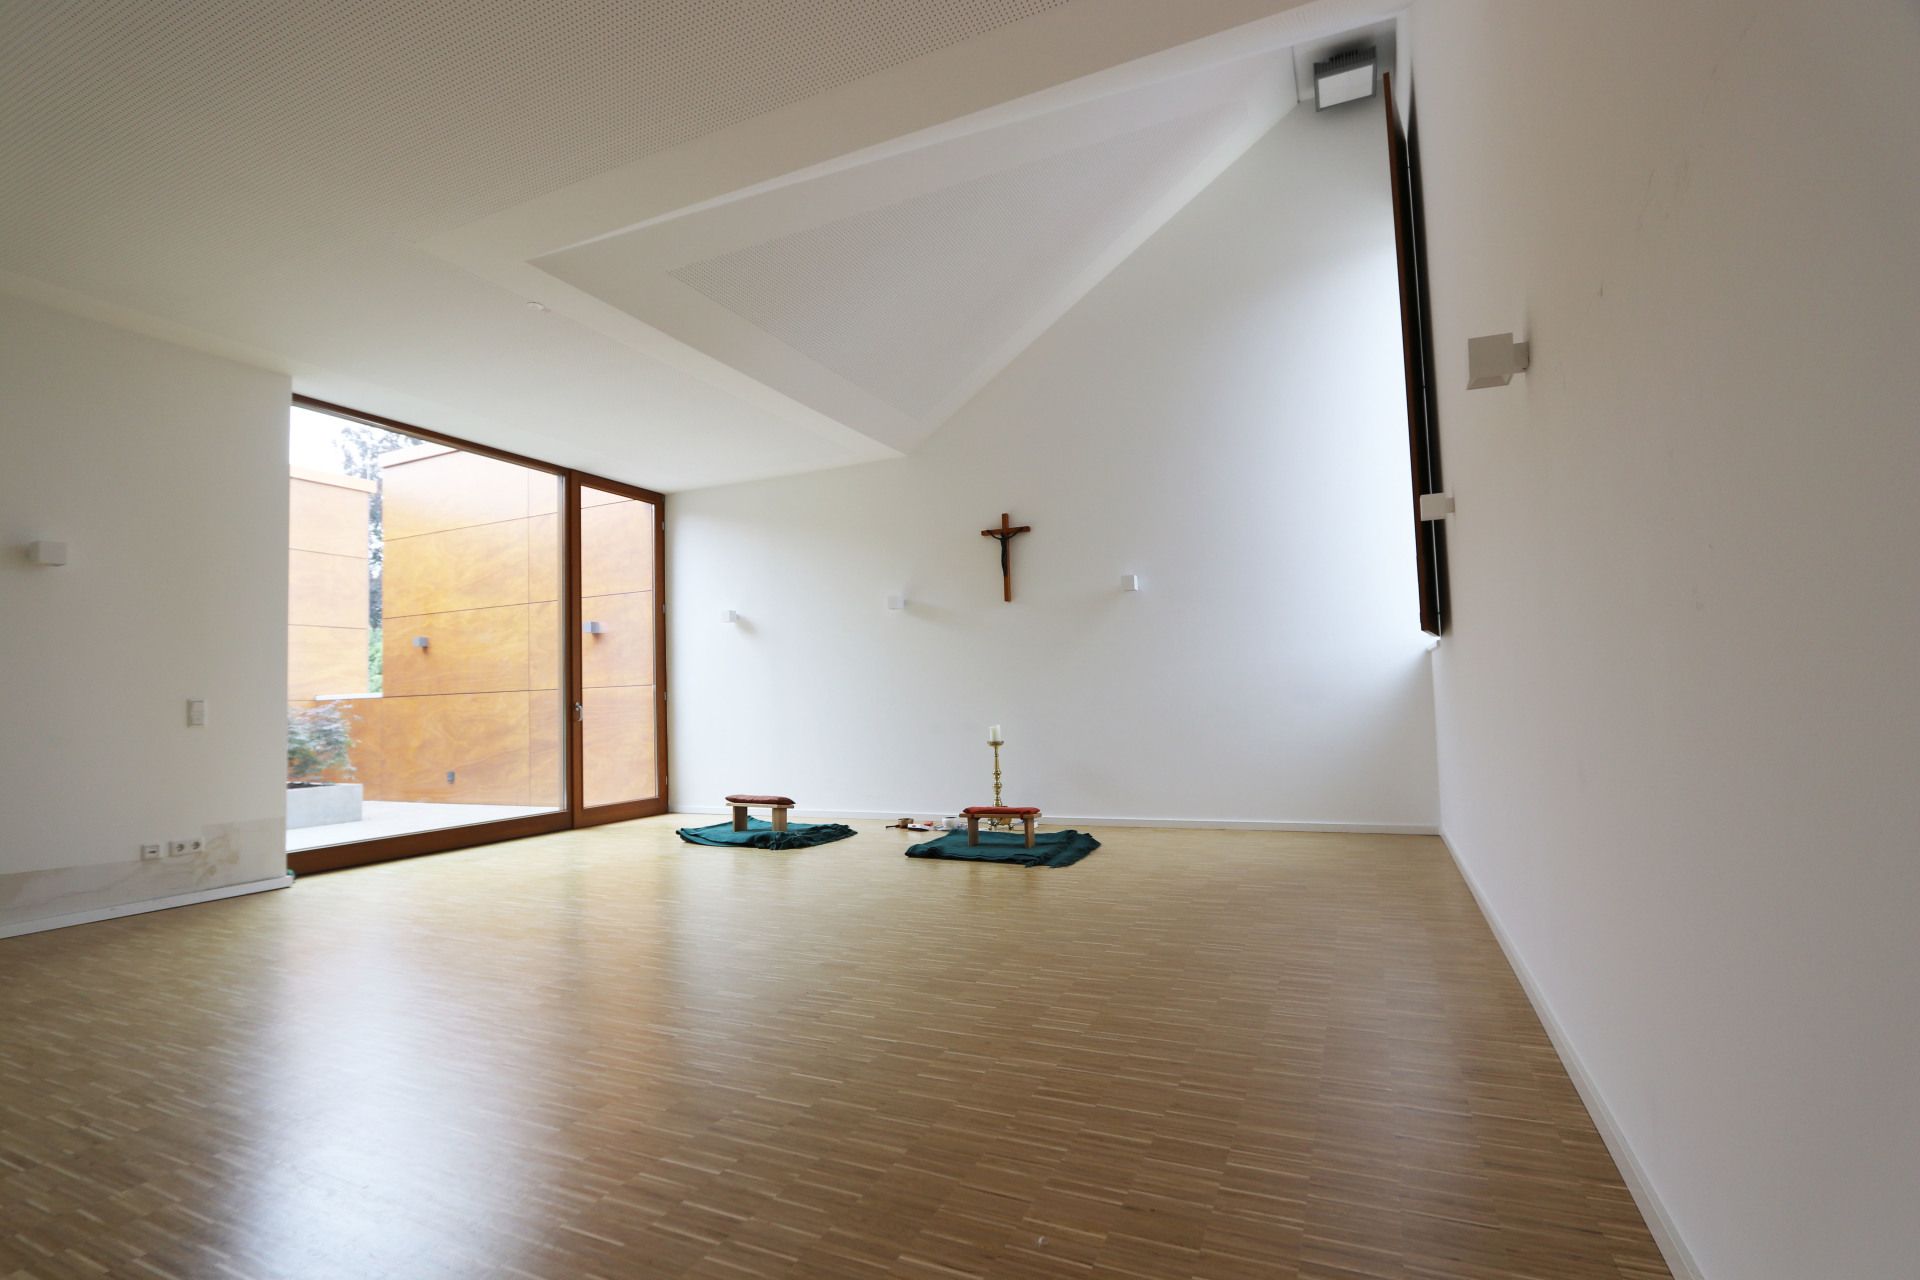 Meditationsraum - Otgerus-Haus - Architekturobjekte ...